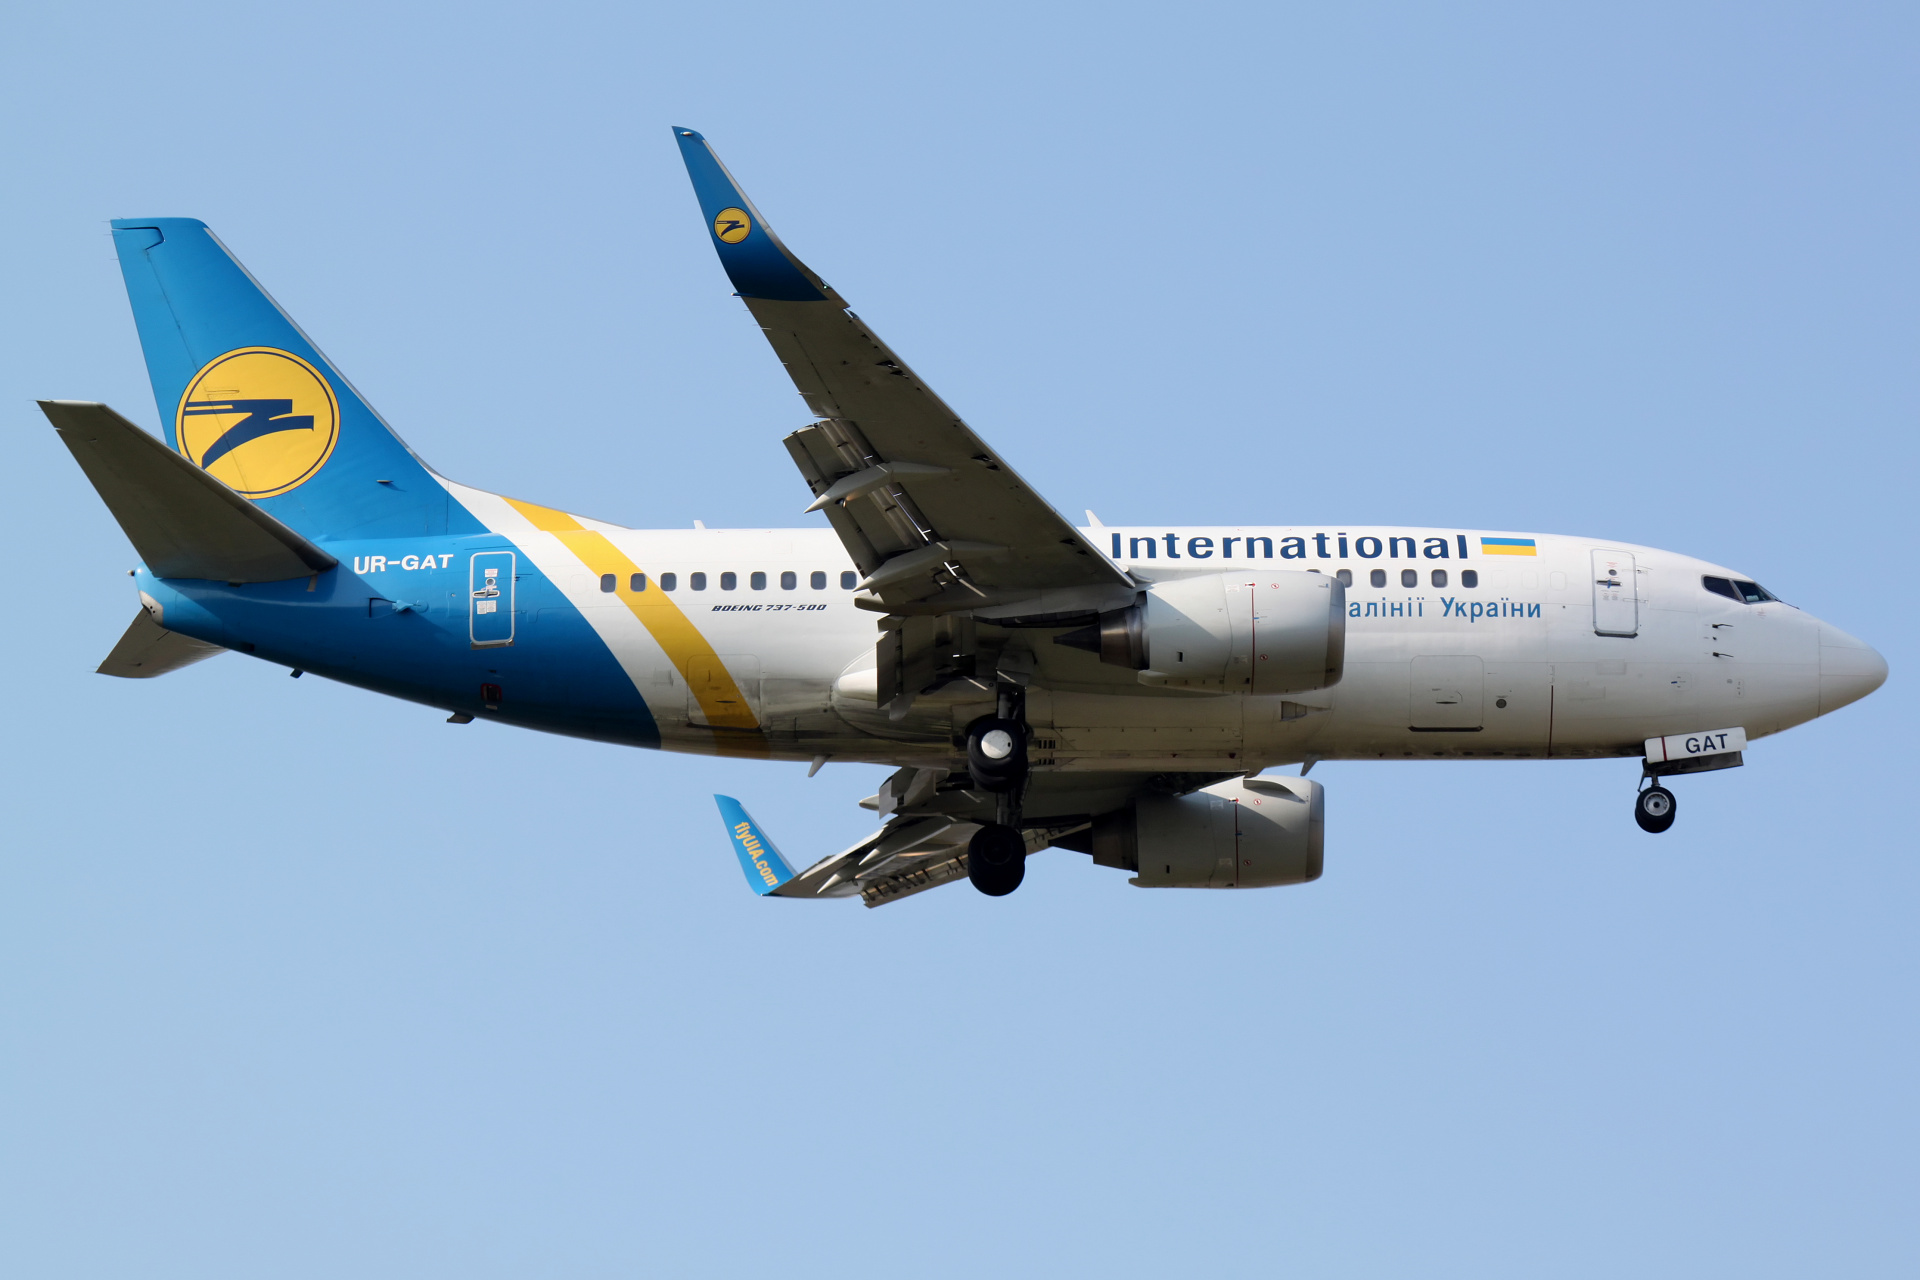 UR-GAT, Ukraine International Airlines (Aircraft » EPWA Spotting » Boeing 737-500)